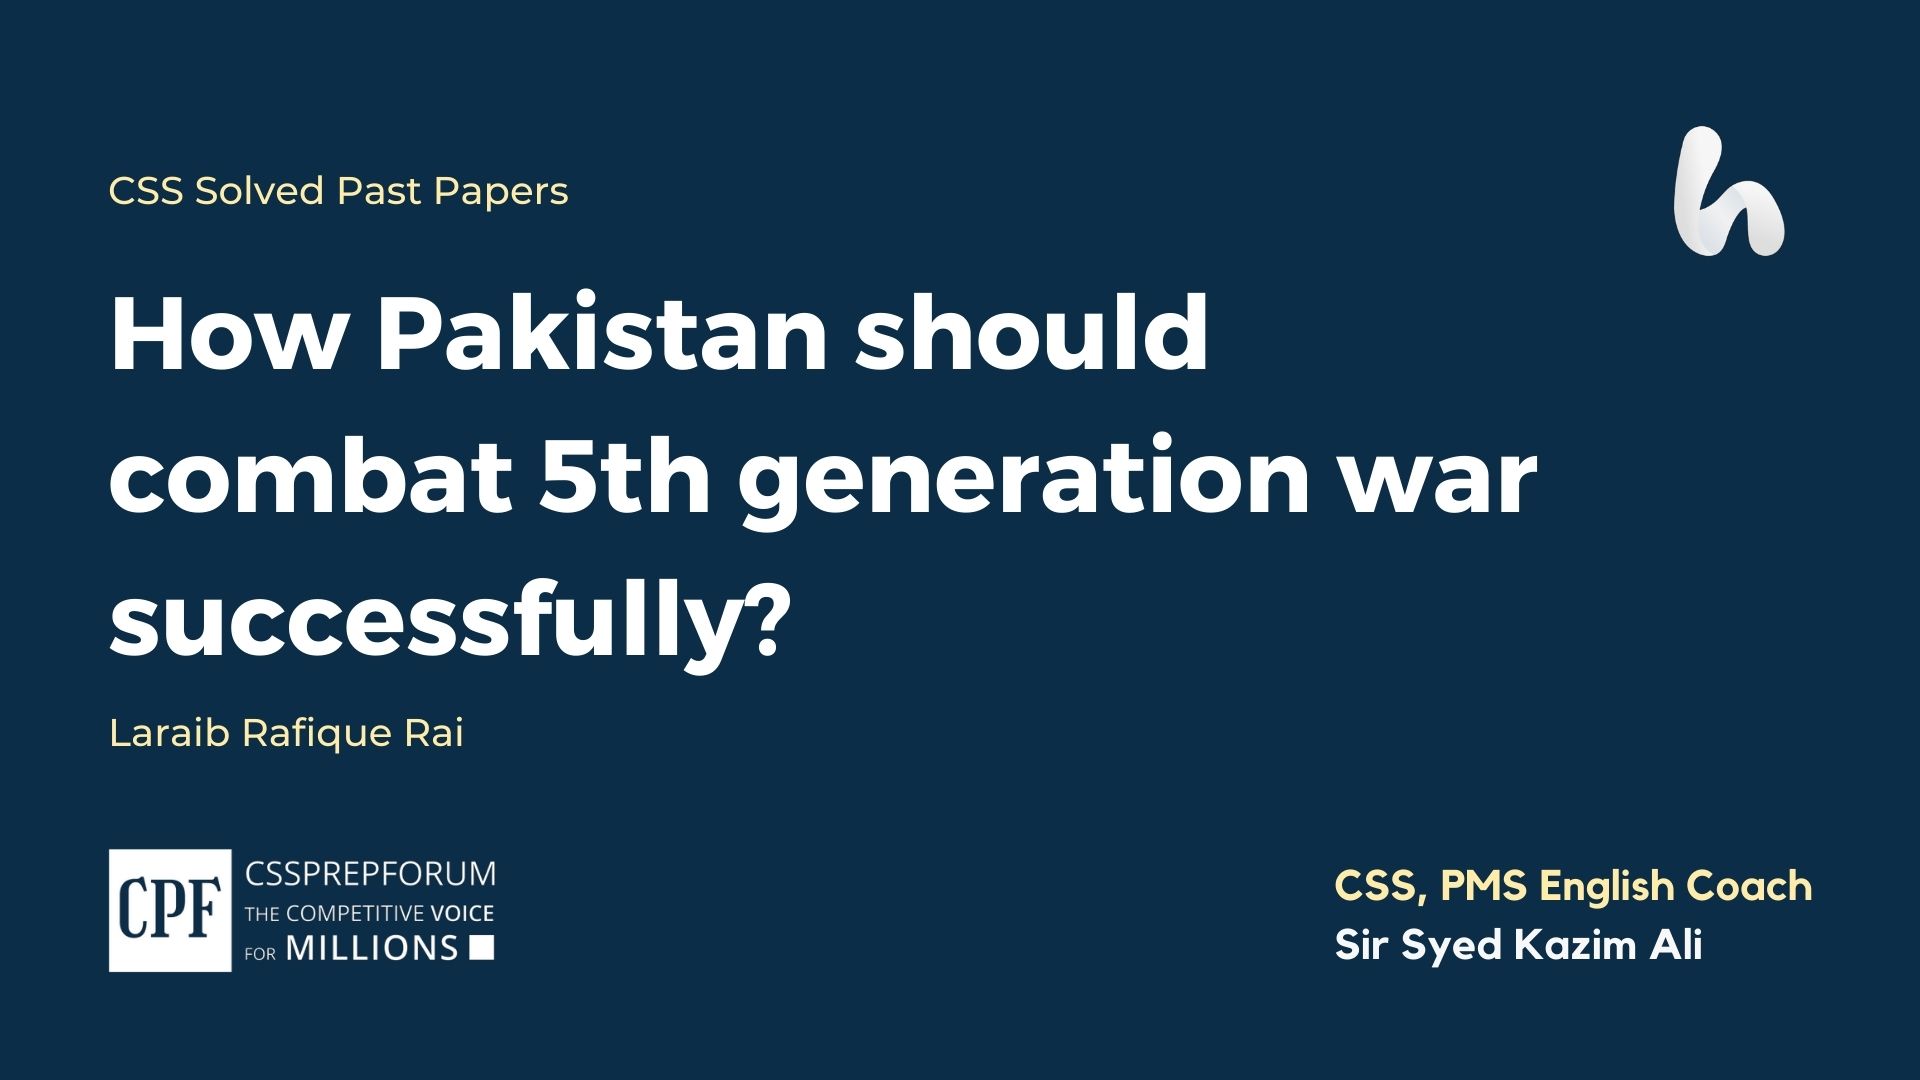 How Pakistan should combat the 5th generation war